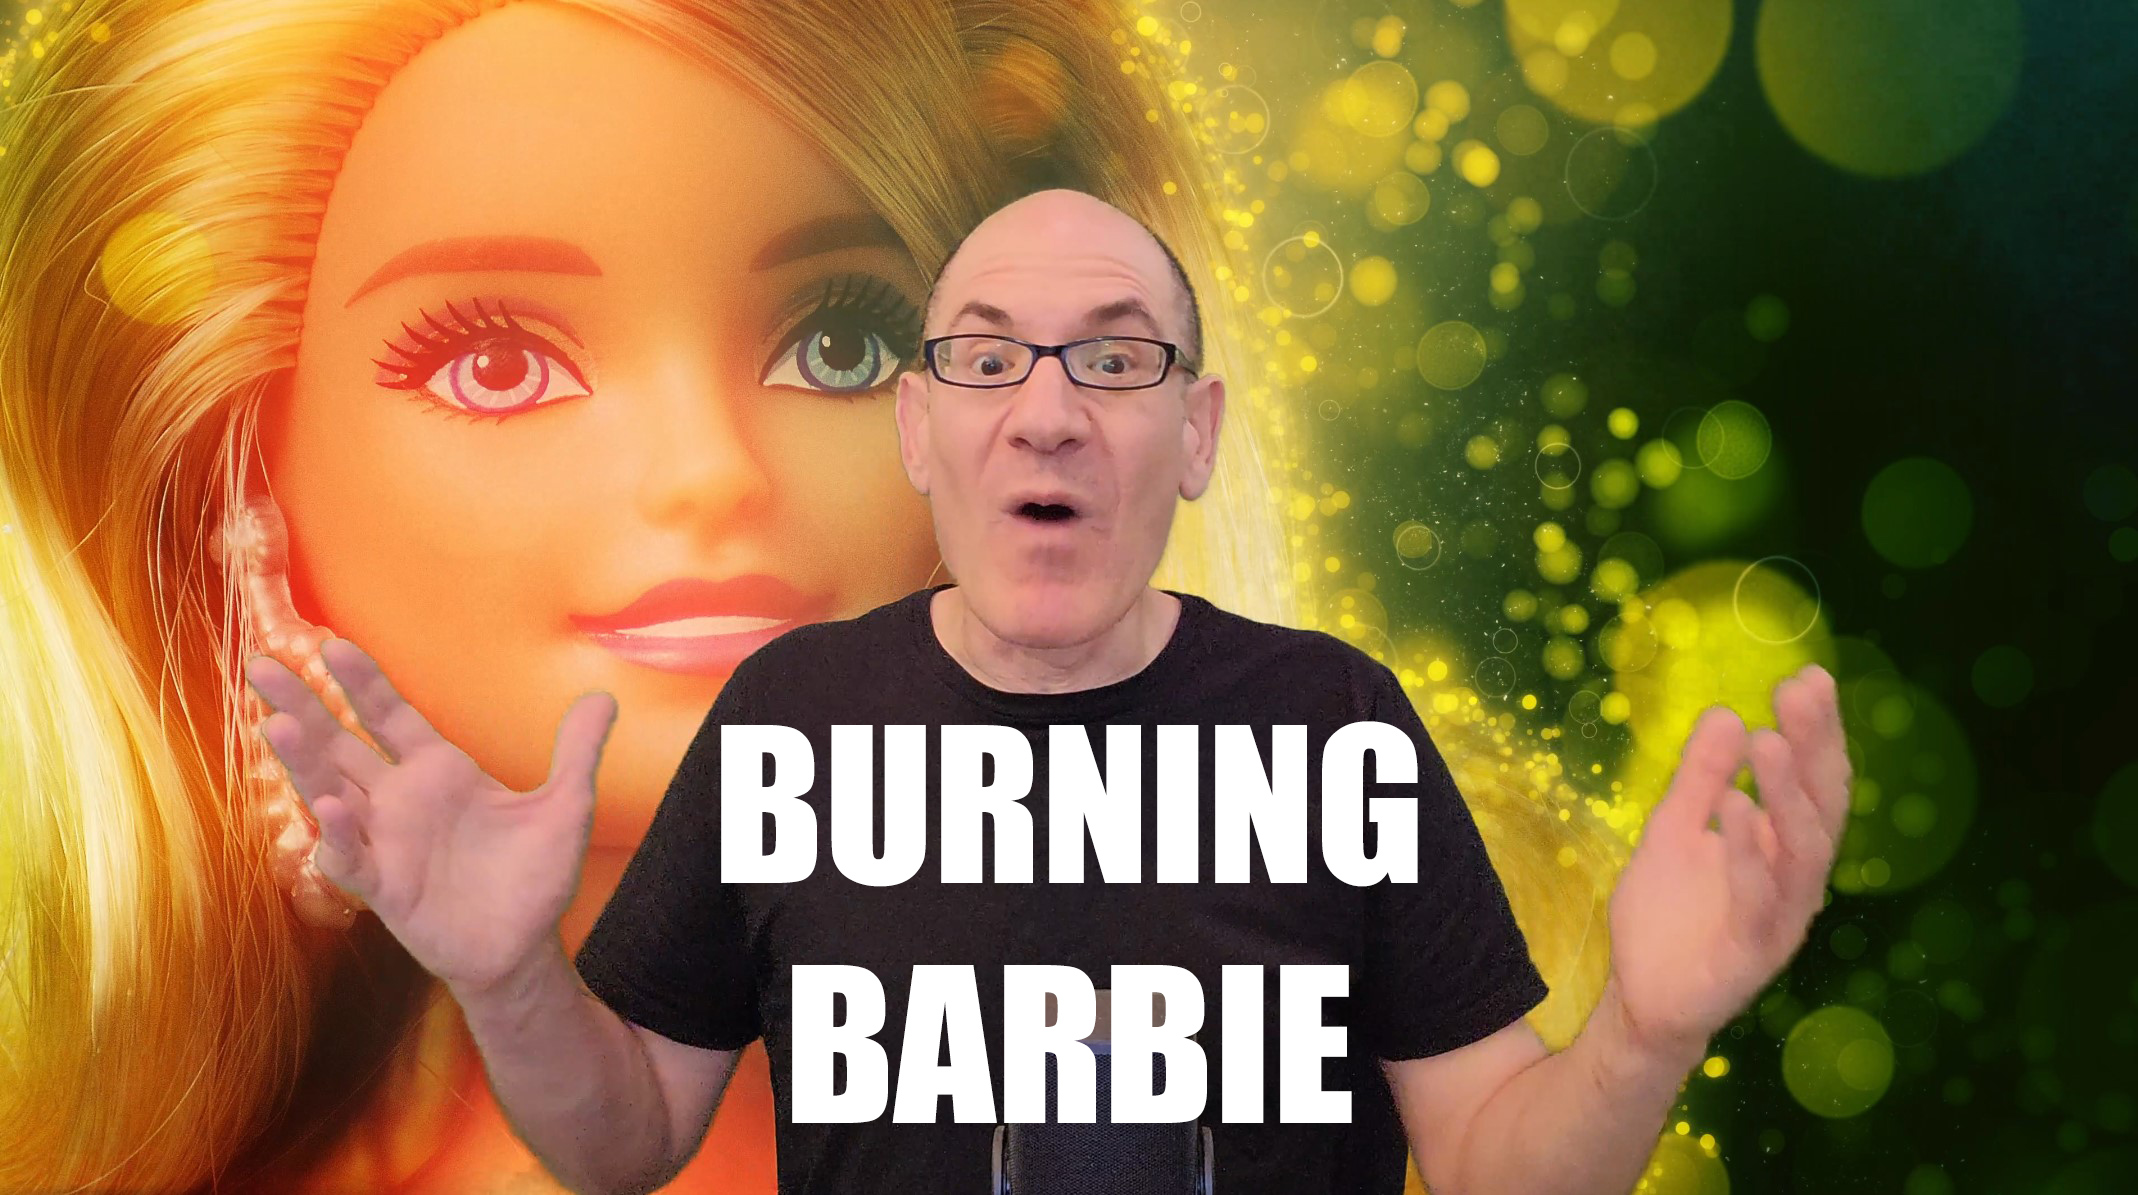 Barbie Movie: Woke Communist Plot or Feminist Fantasia?